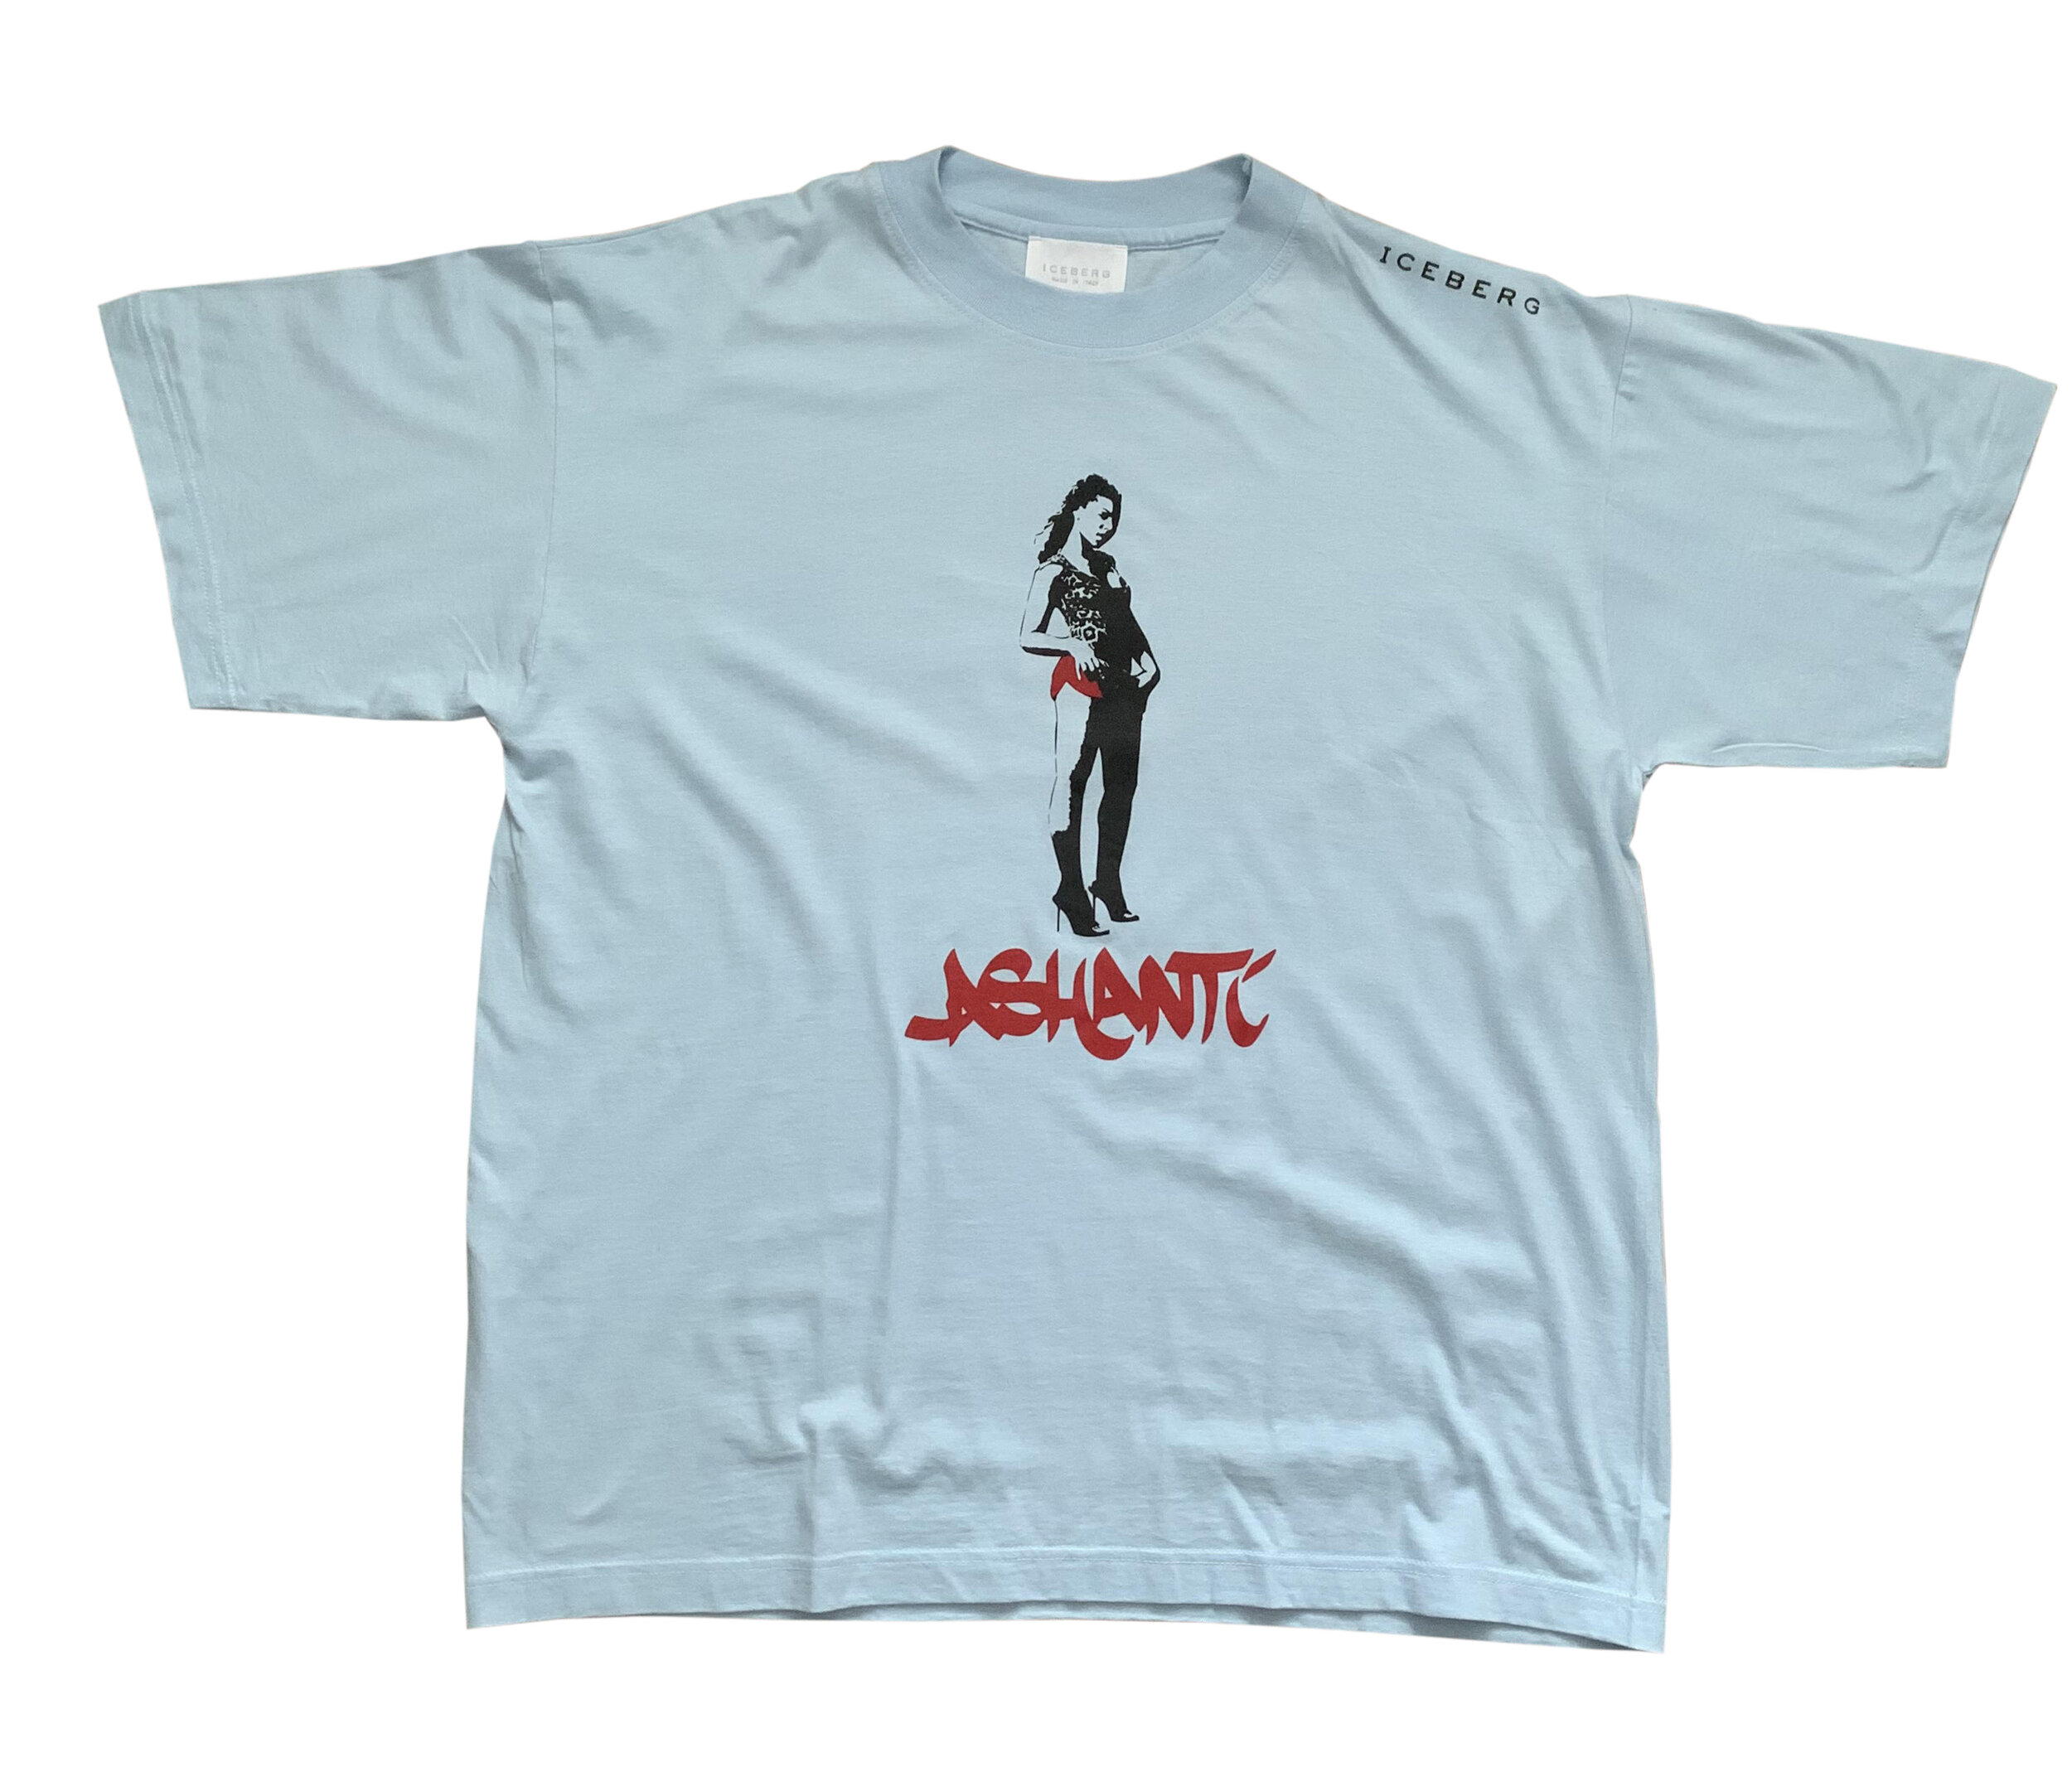 Vintage Iceberg Ashanti Album Release Party T Shirt Size L NWT